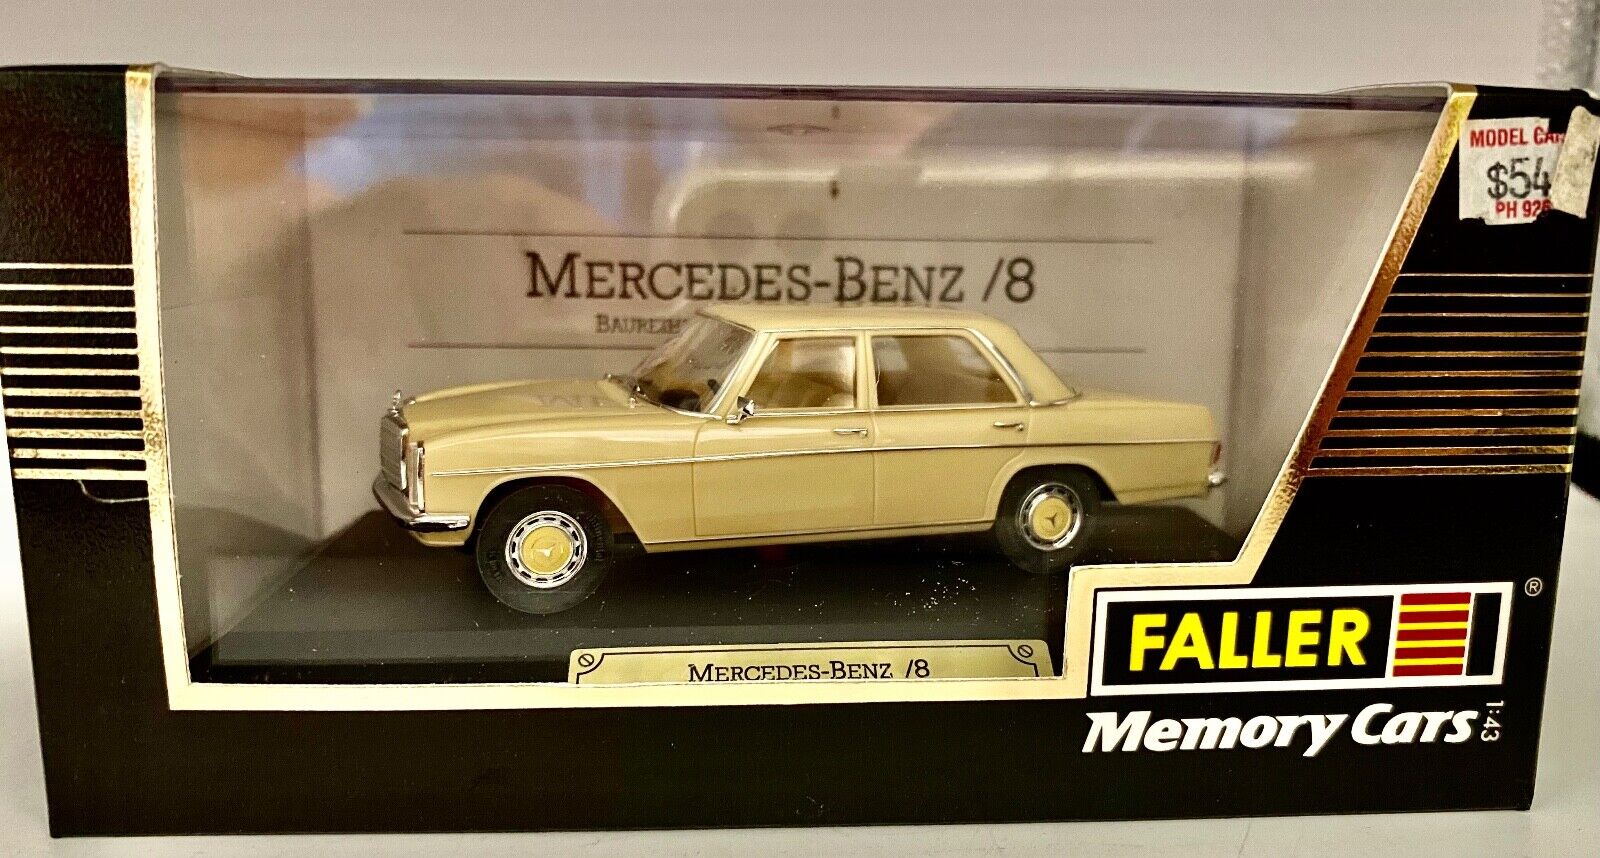 Model Car Faller Memory Mercedes Benz /8 Scale 1.43 NIB